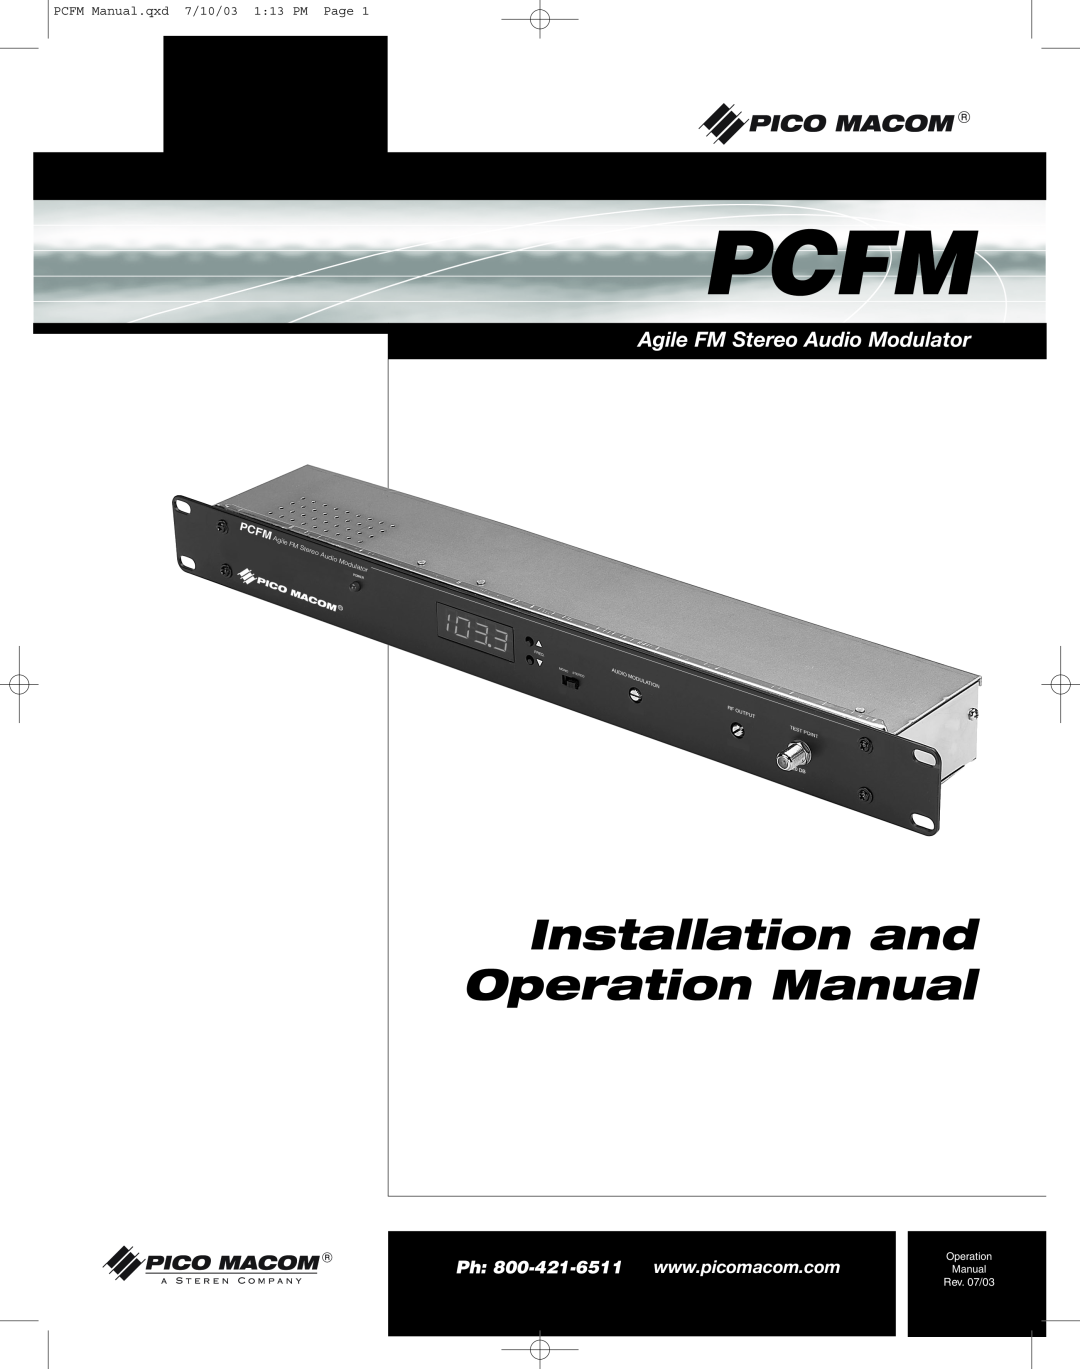 Pico Macom operation manual Pcfm, Agile FM Stereo Audio Modulator, PCFM Manual.qxd 7/10/03 1 13 PM Page, Rev. 07/03 